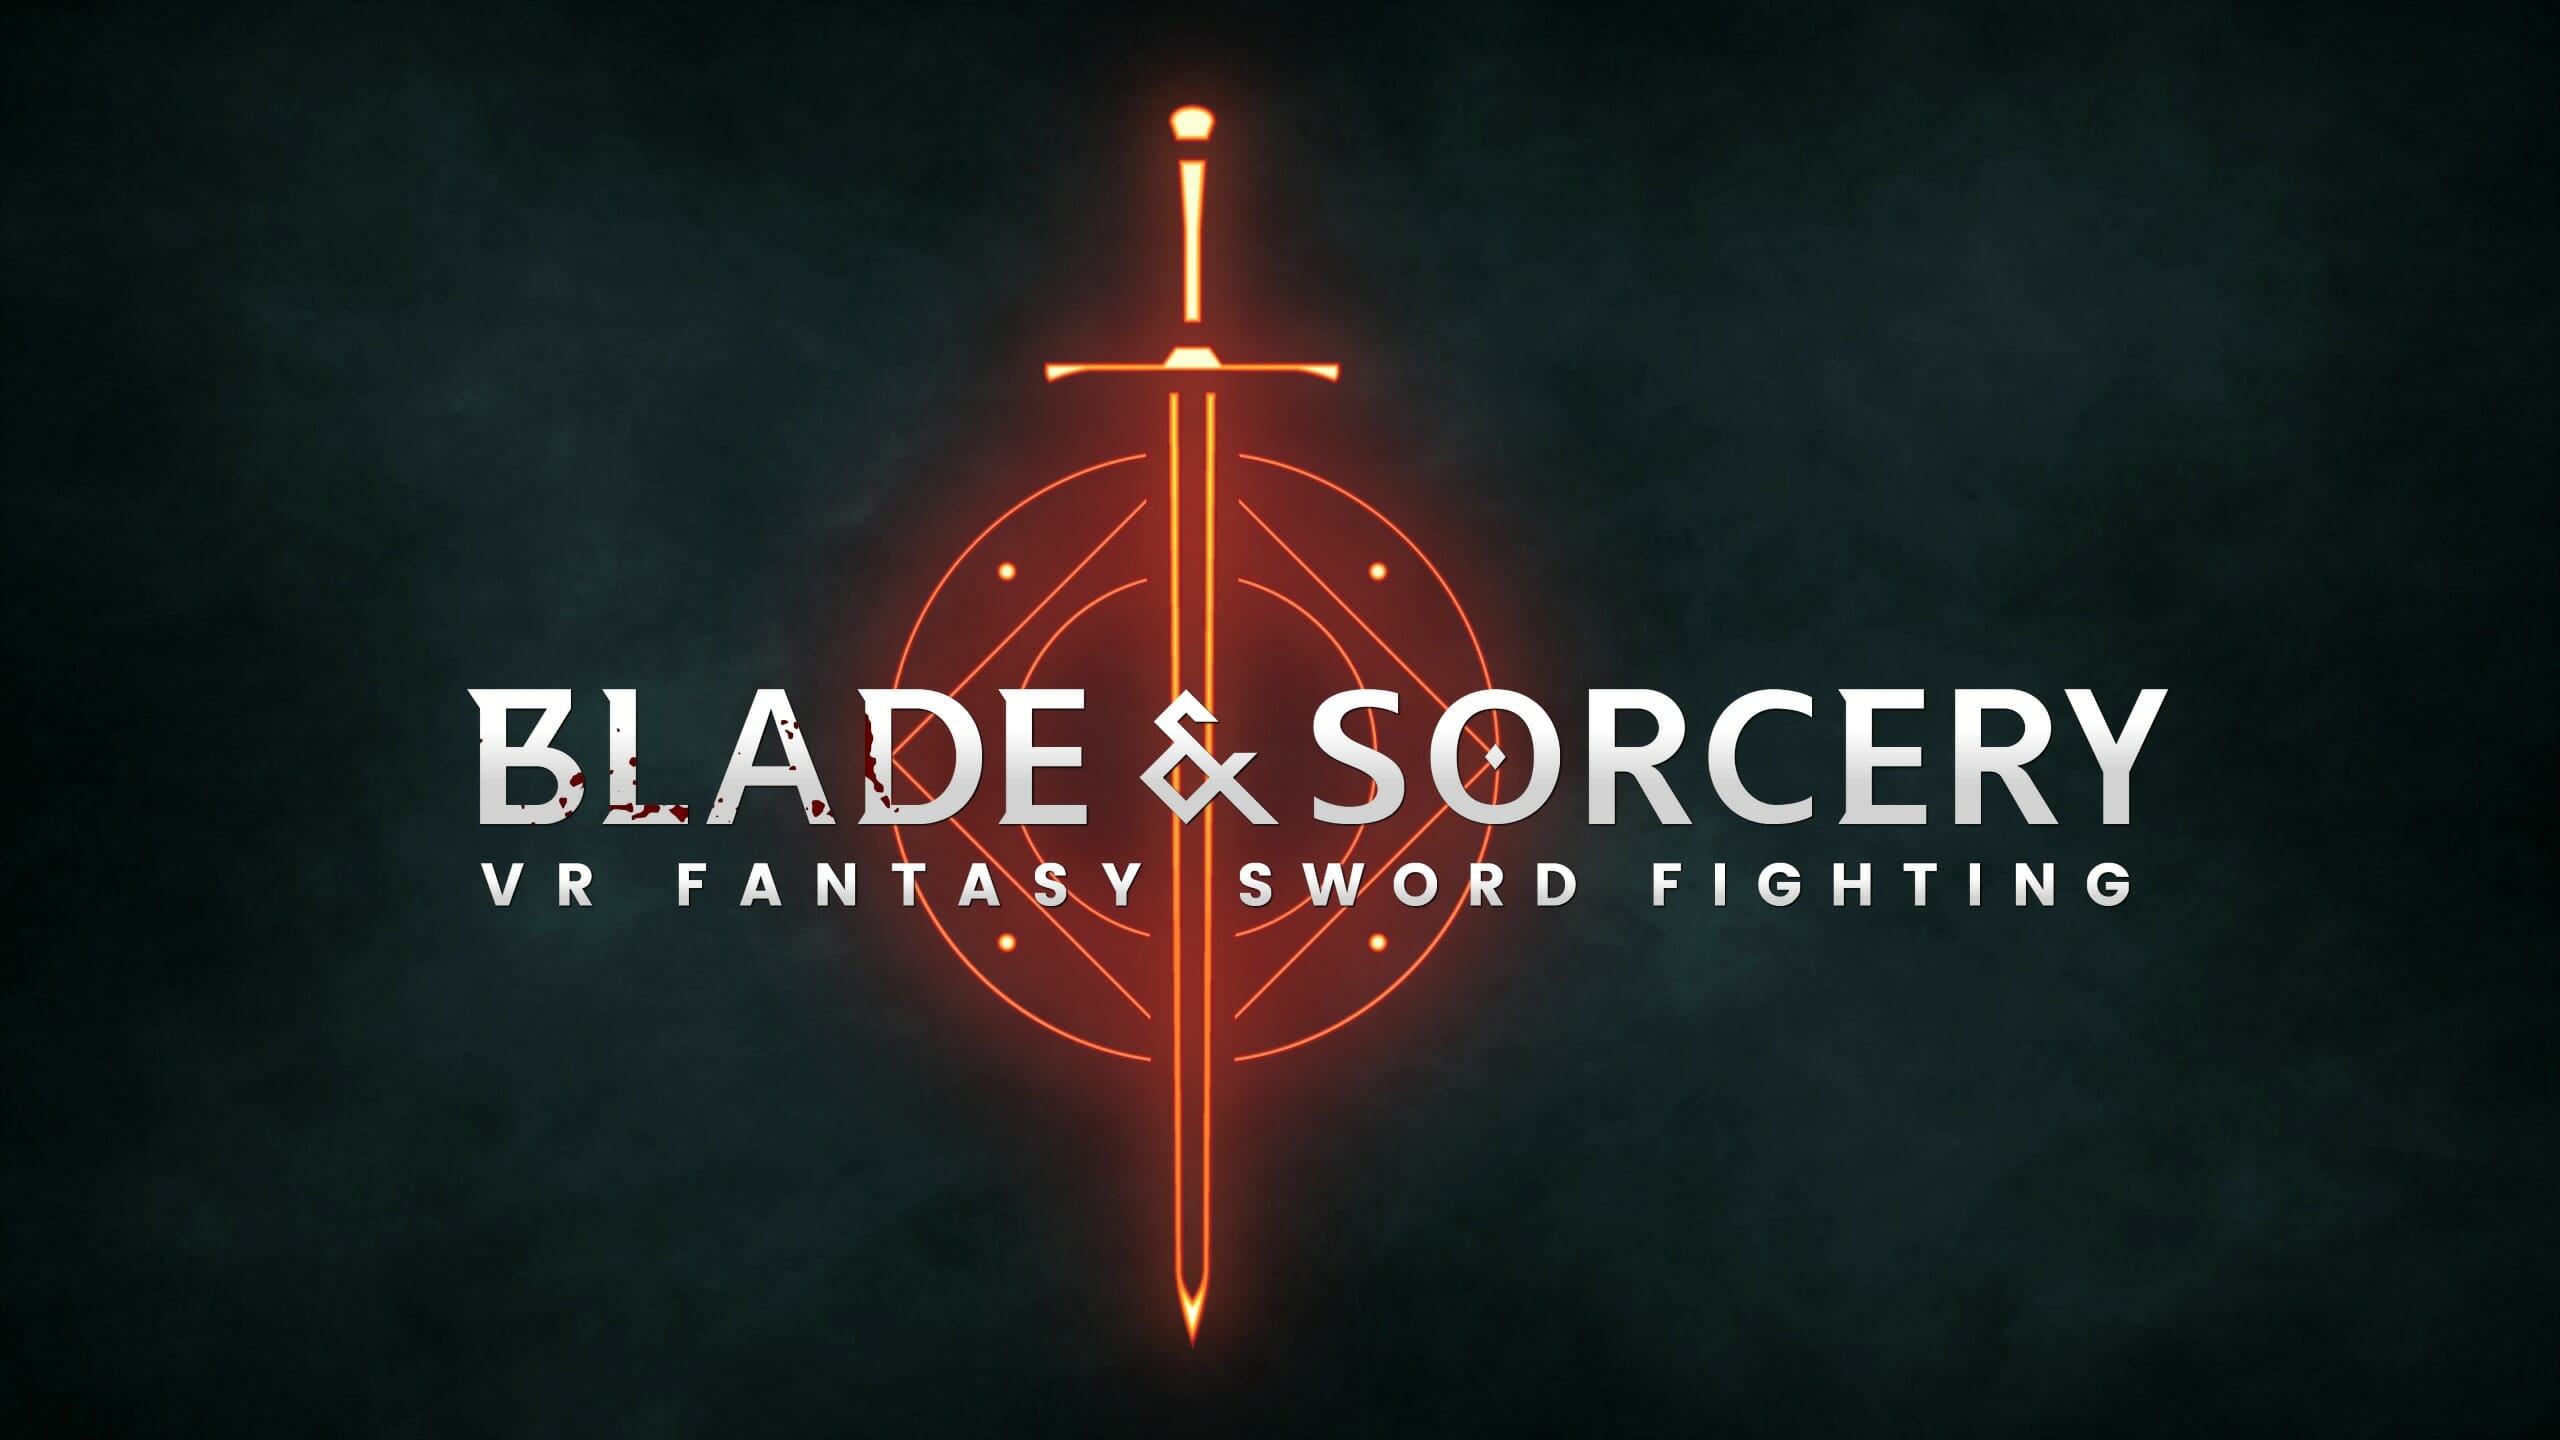 blade and sorcery controls feel sluggish